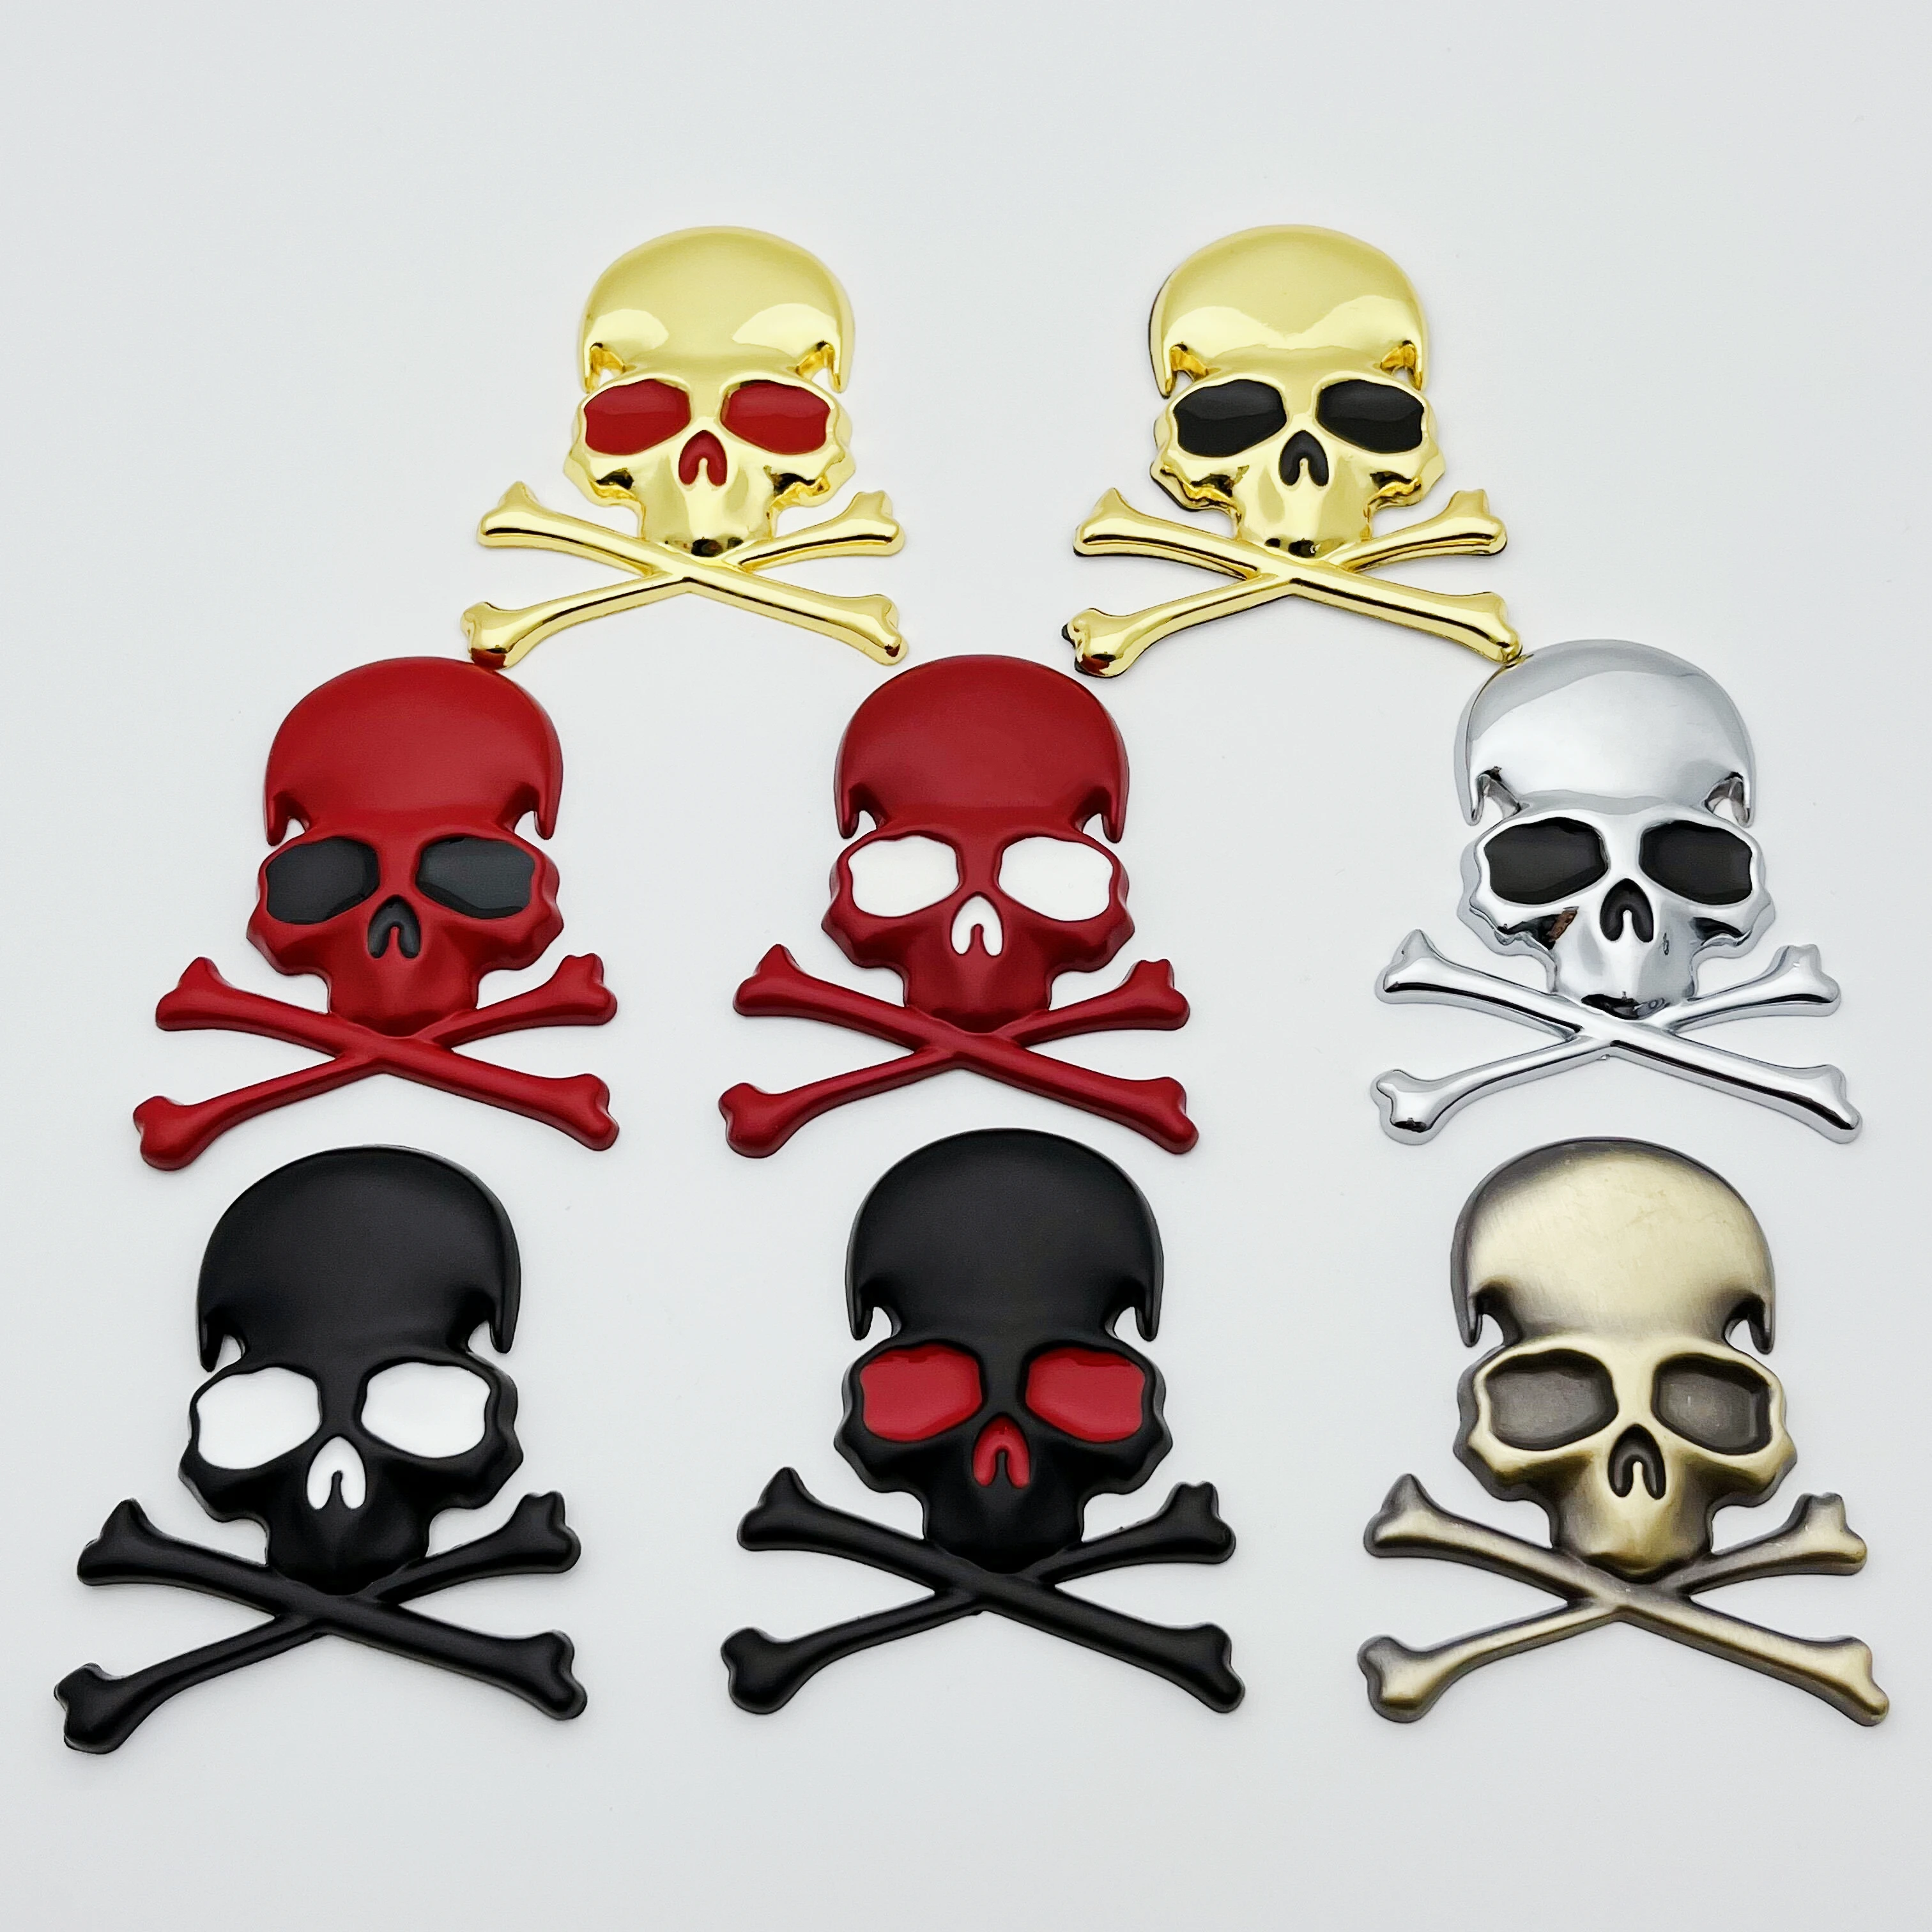 

3D Metal 60mmx70mm Skull Skeleton Crossbones Car Motorcycle Stickers Truck Label Emblem Badge Car Styling Decoration Accessories